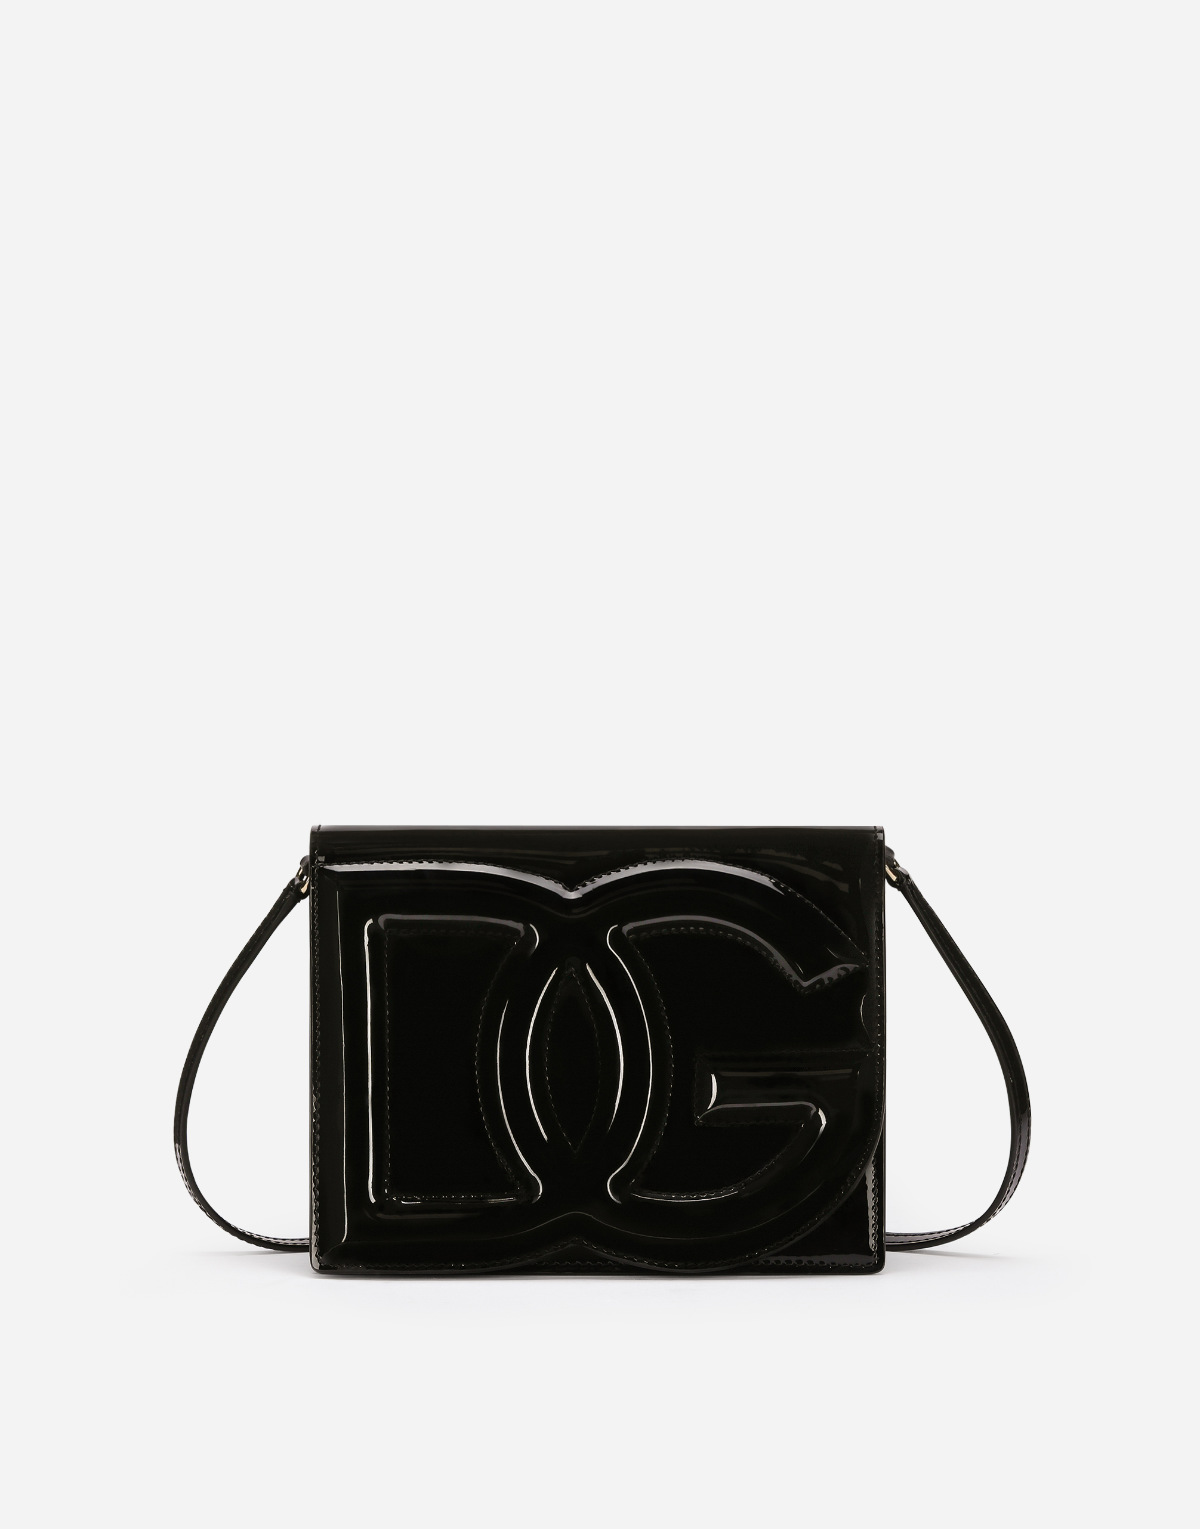 Dolce&Gabbana Presents Its New DG Logo Bag